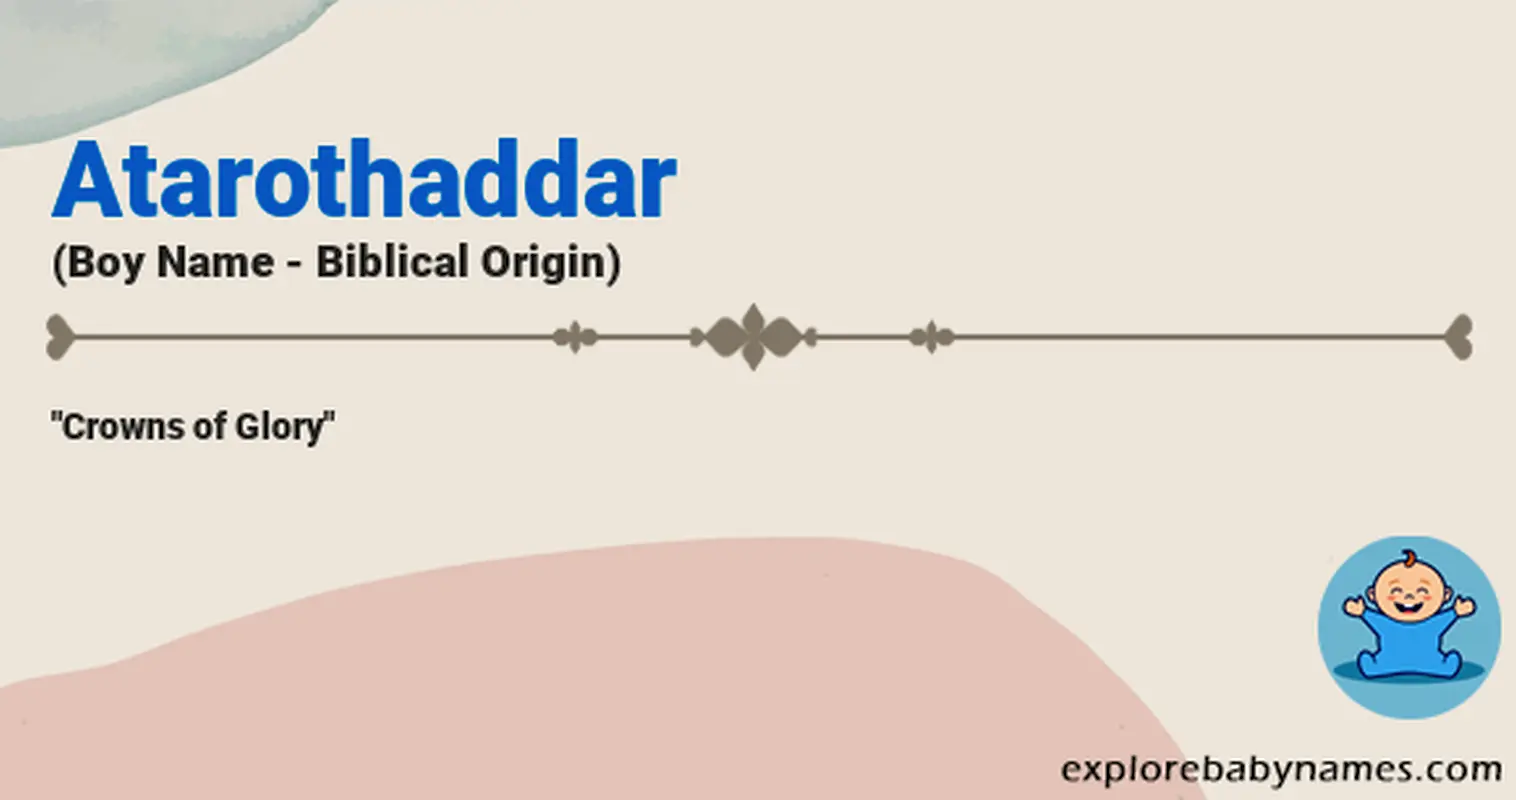 Meaning of Atarothaddar